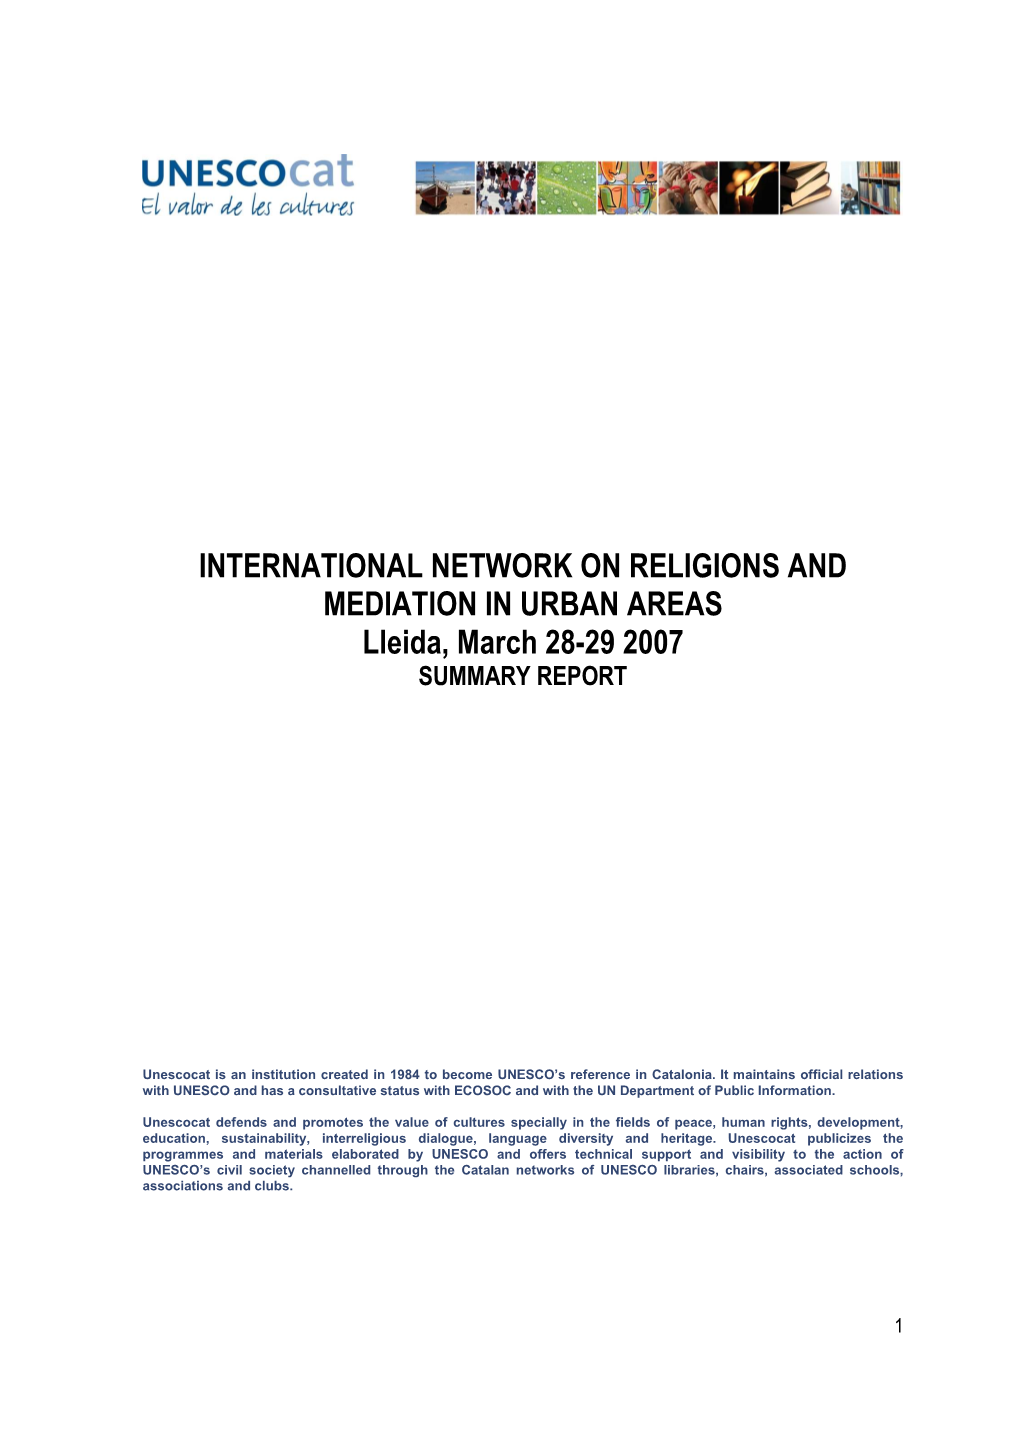 International Network Report